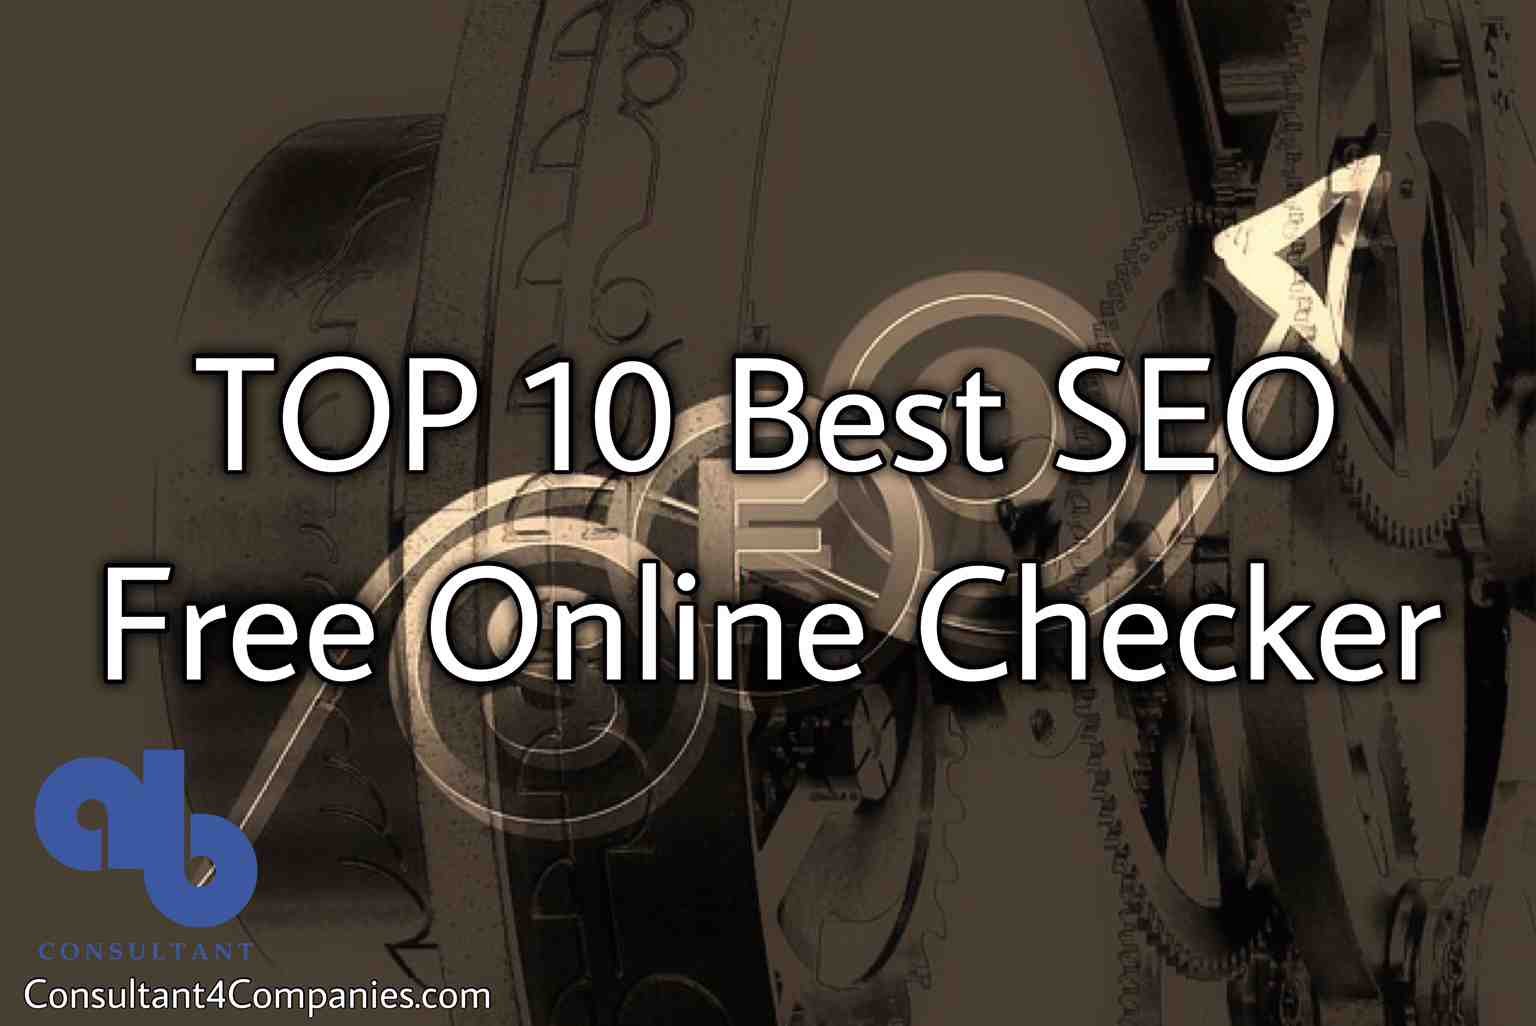 Best SEO Free Online Checker